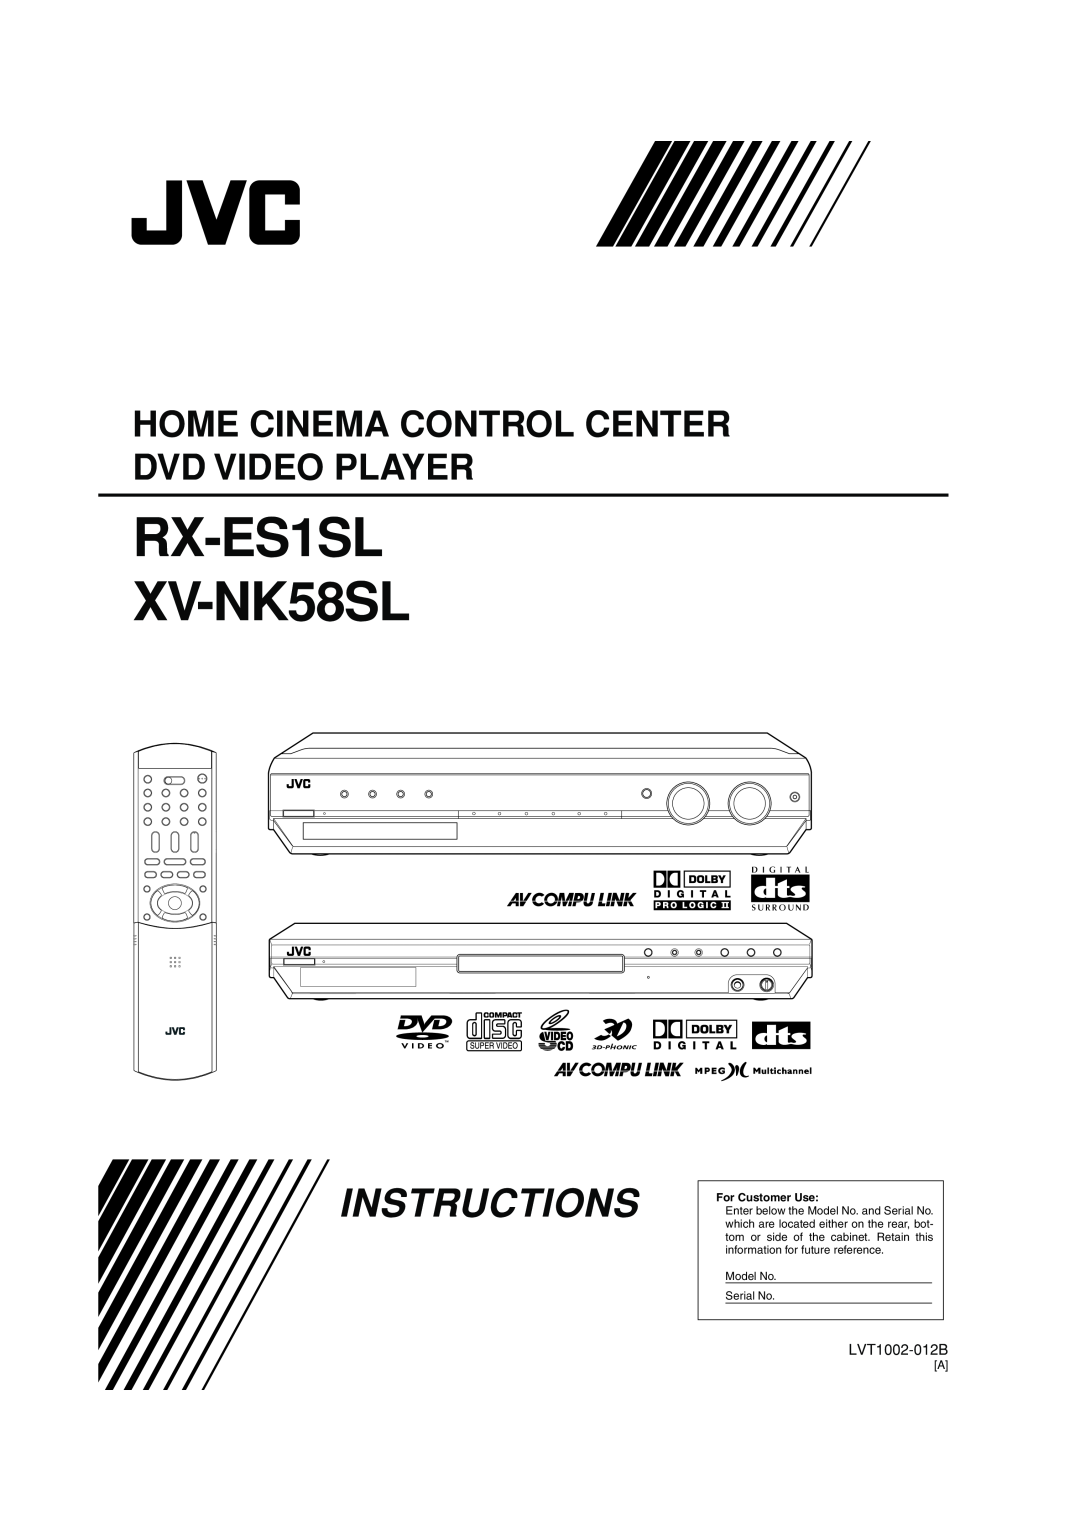 JVC LVT1002-012B manual RX-ES1SL XV-NK58SL, Instructions, Home Cinema Control Center Dvd Video Player, For Customer Use 